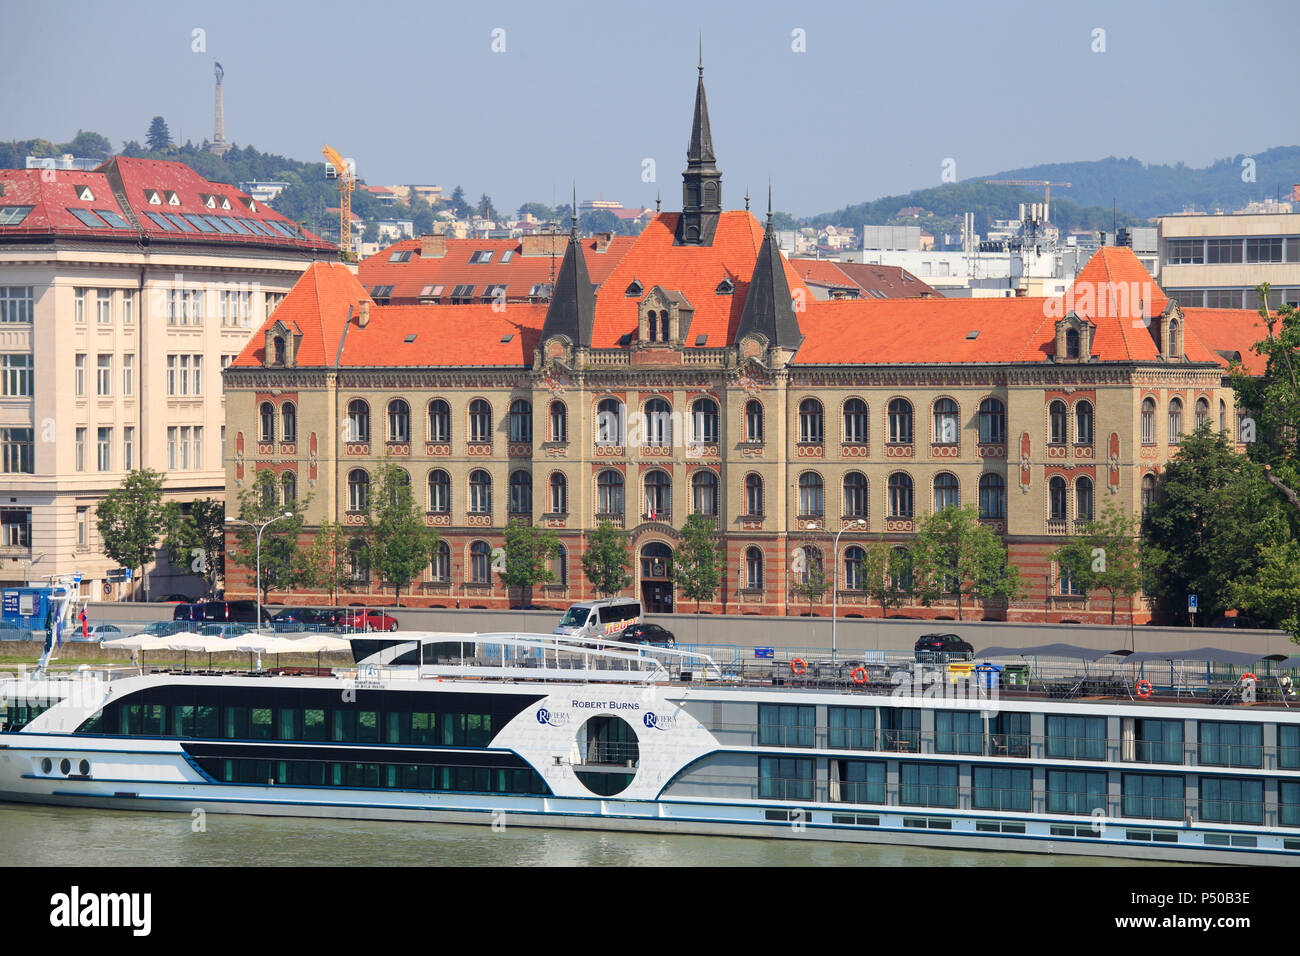 Slovakia, Bratislava, Natural History Museum, Danube river, cruise ship, Stock Photo